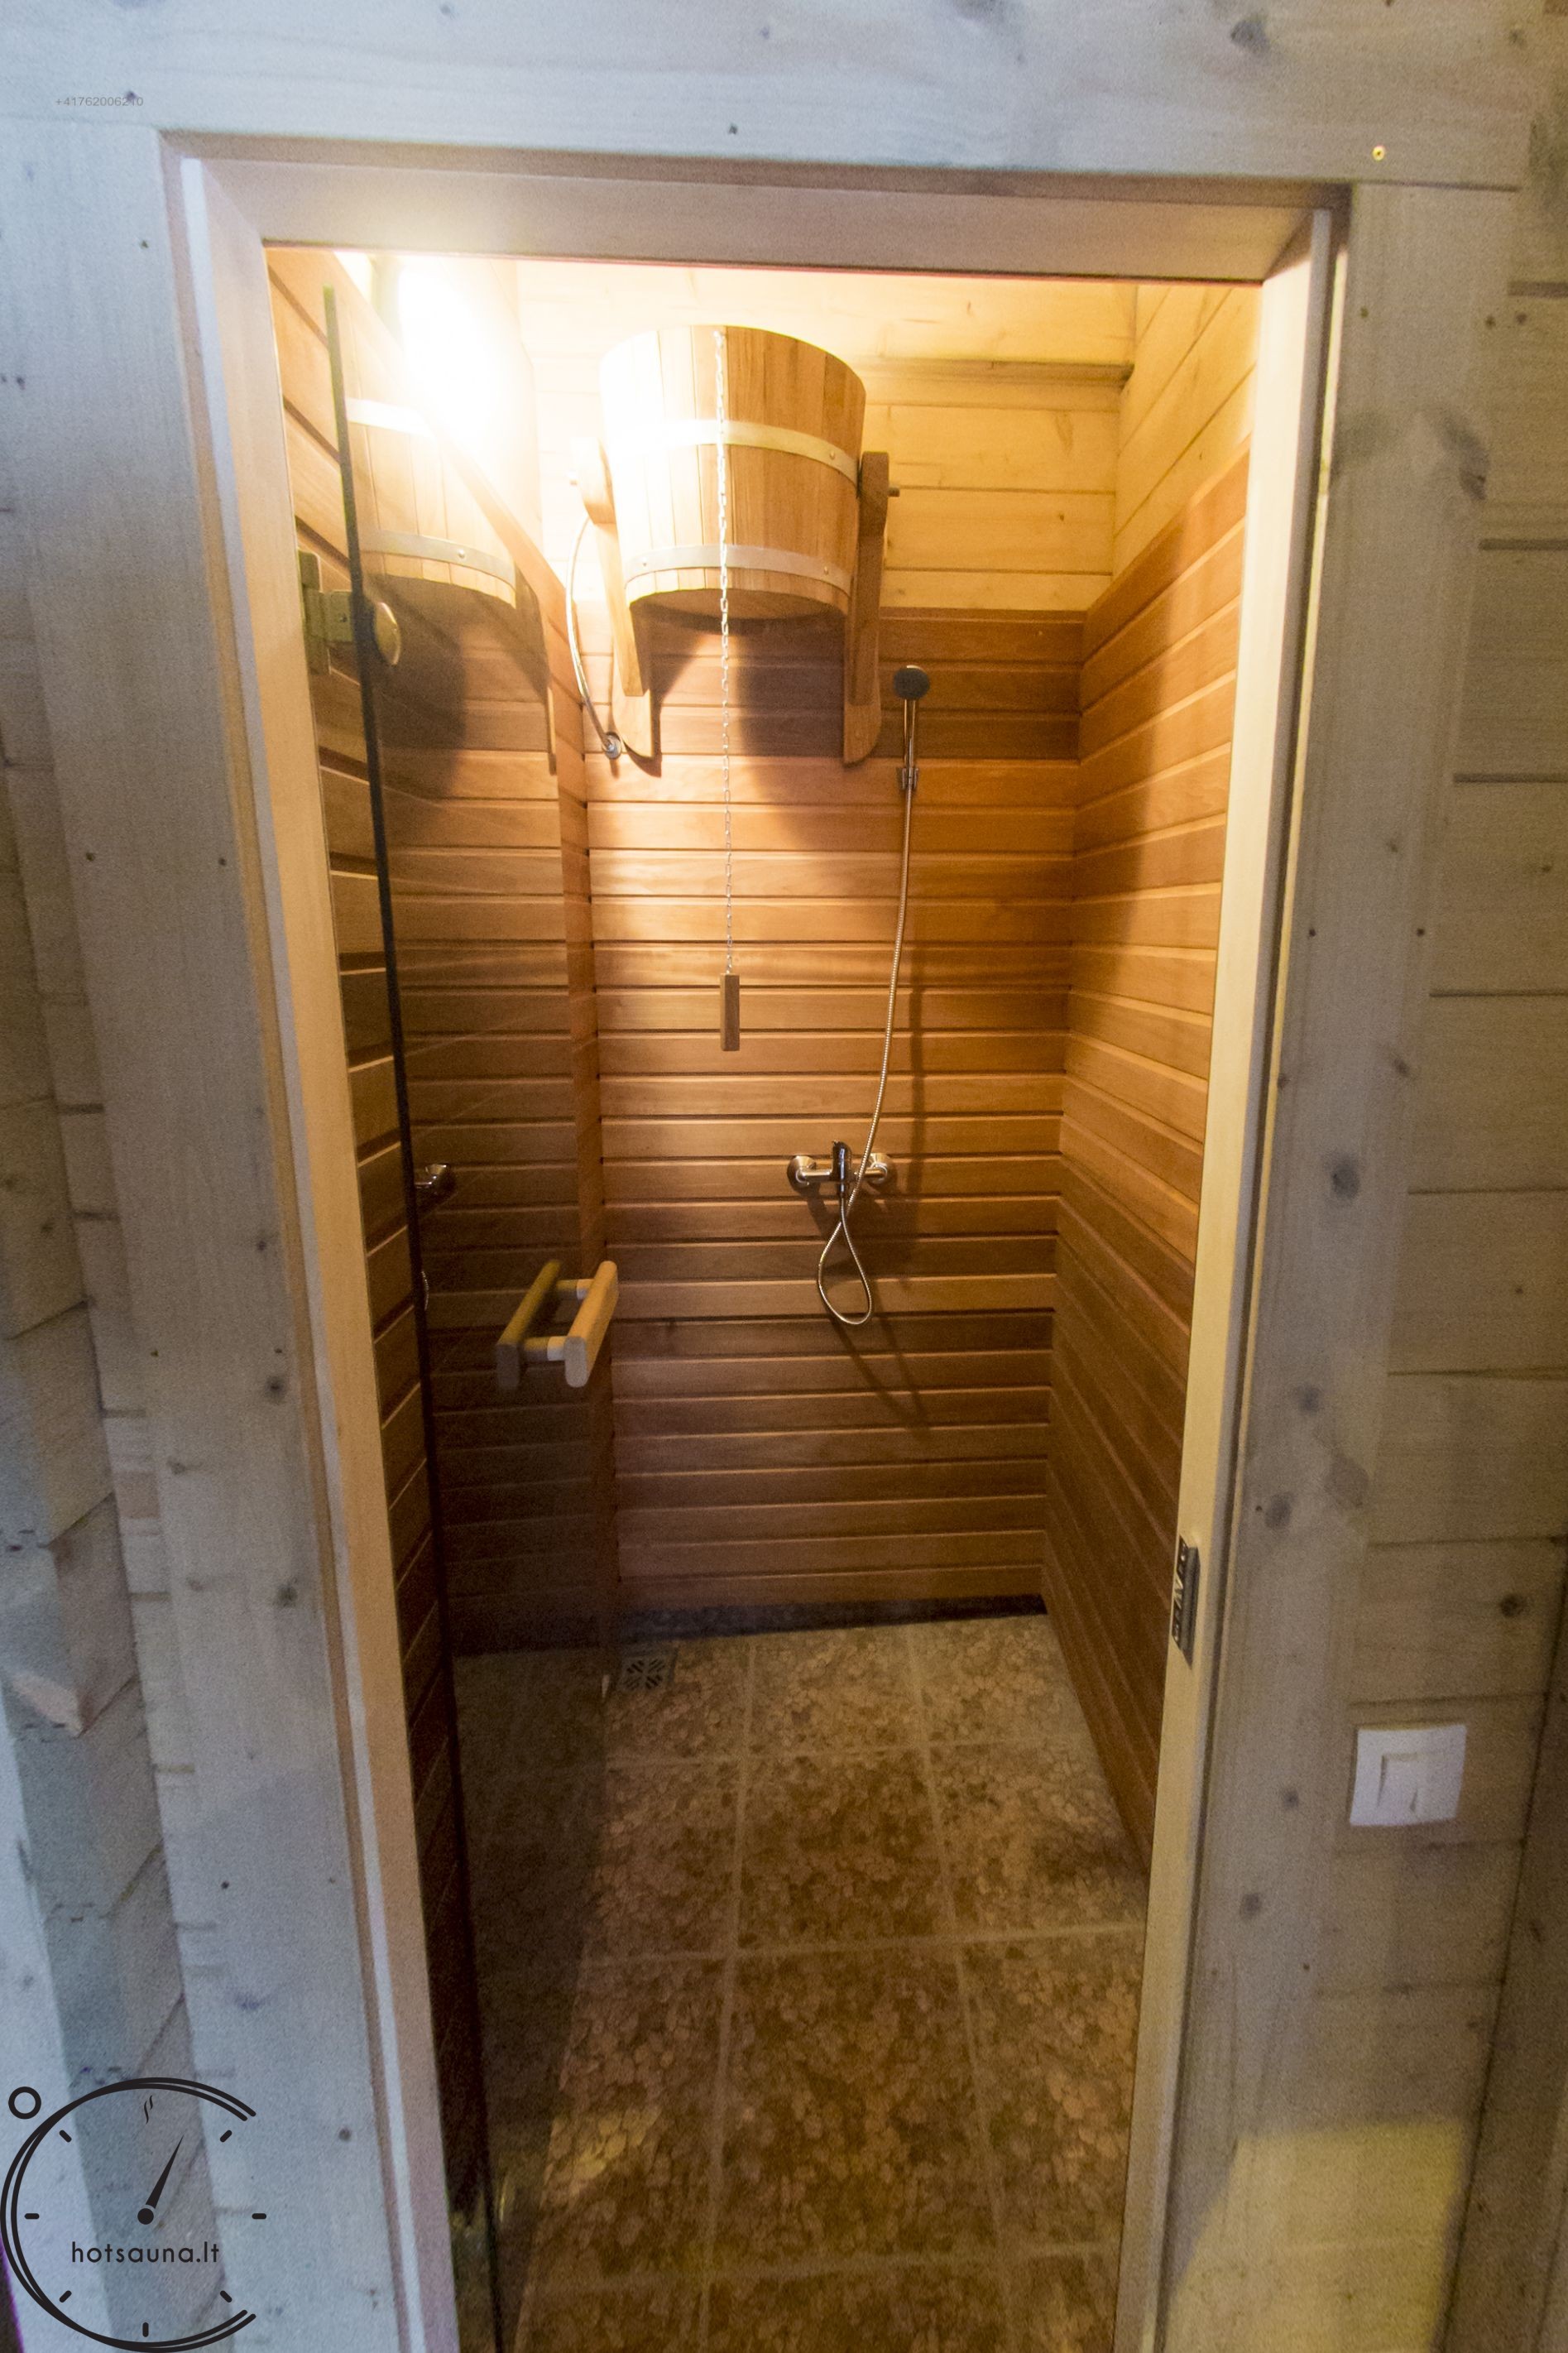 sauna for sale kauferproduktion saunamd1 (15)